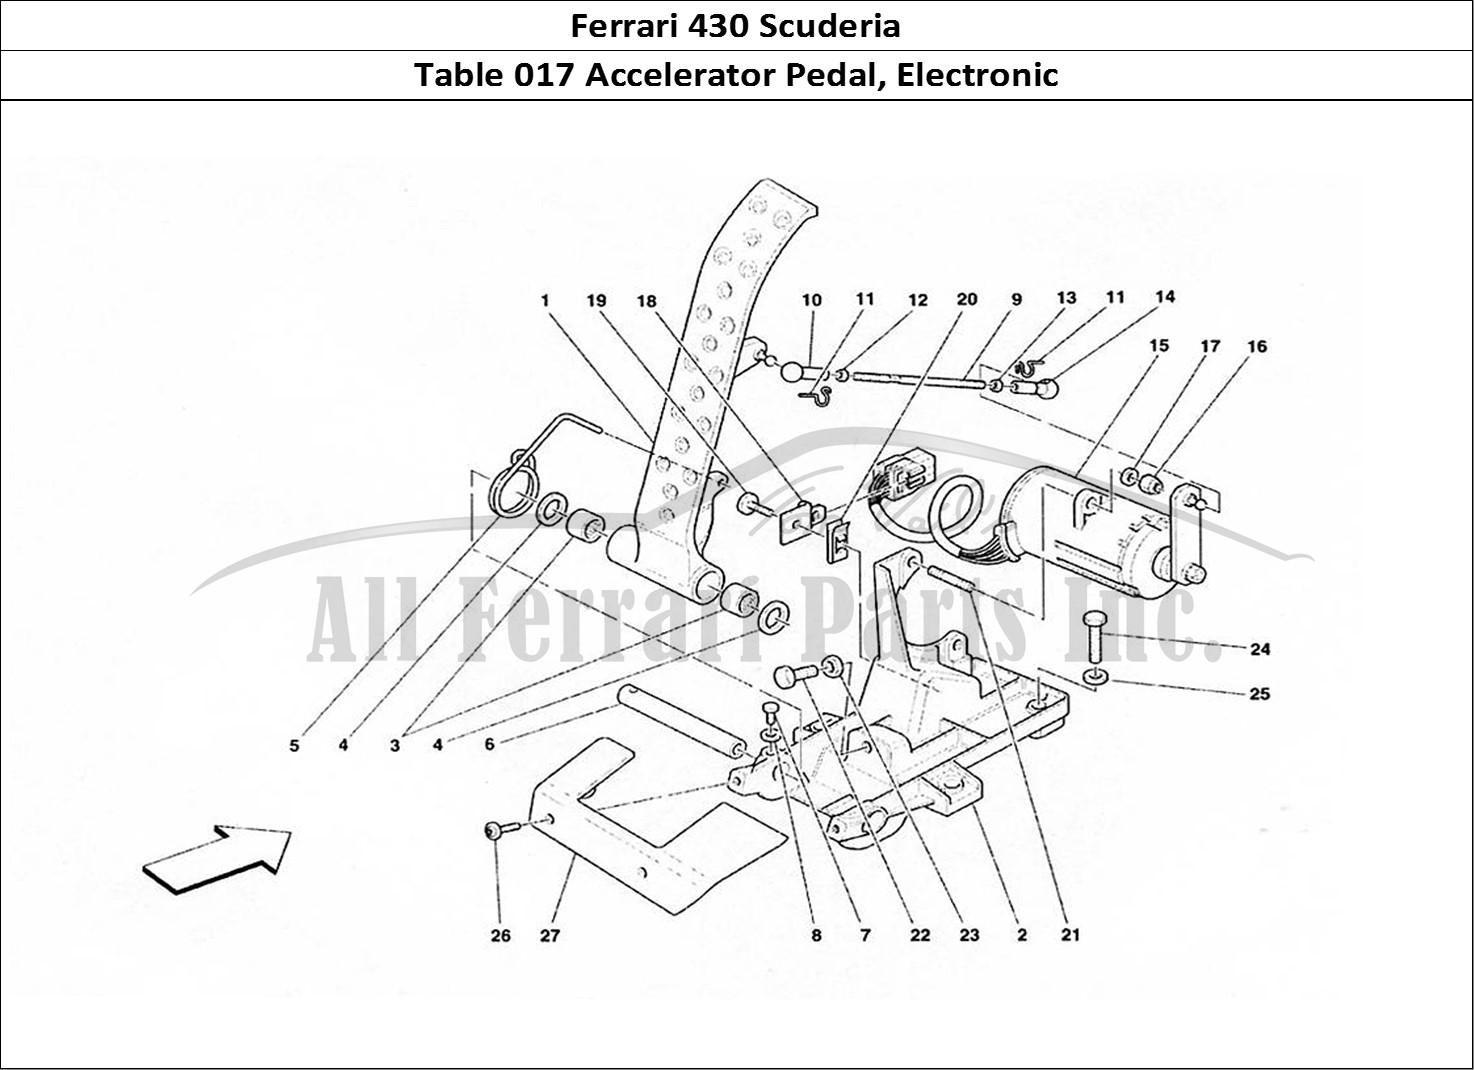 Ferrari Parts Ferrari 430 Scuderia Page 017 Electronic Accelerator Pe